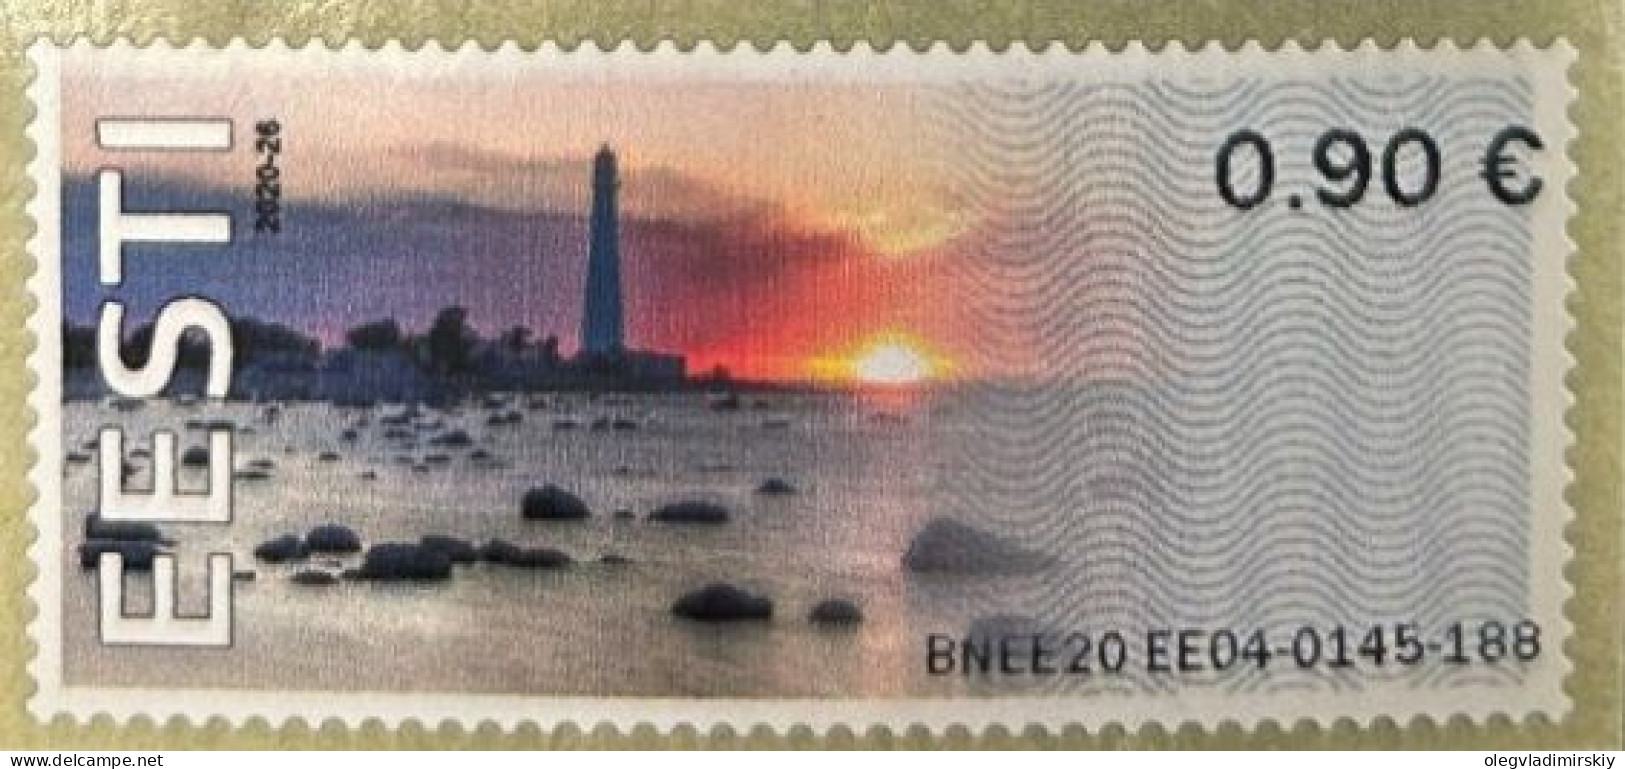 Estonia Estland Estonie 2020 Tahkuna Lighthouse Stamp MNH - Lighthouses